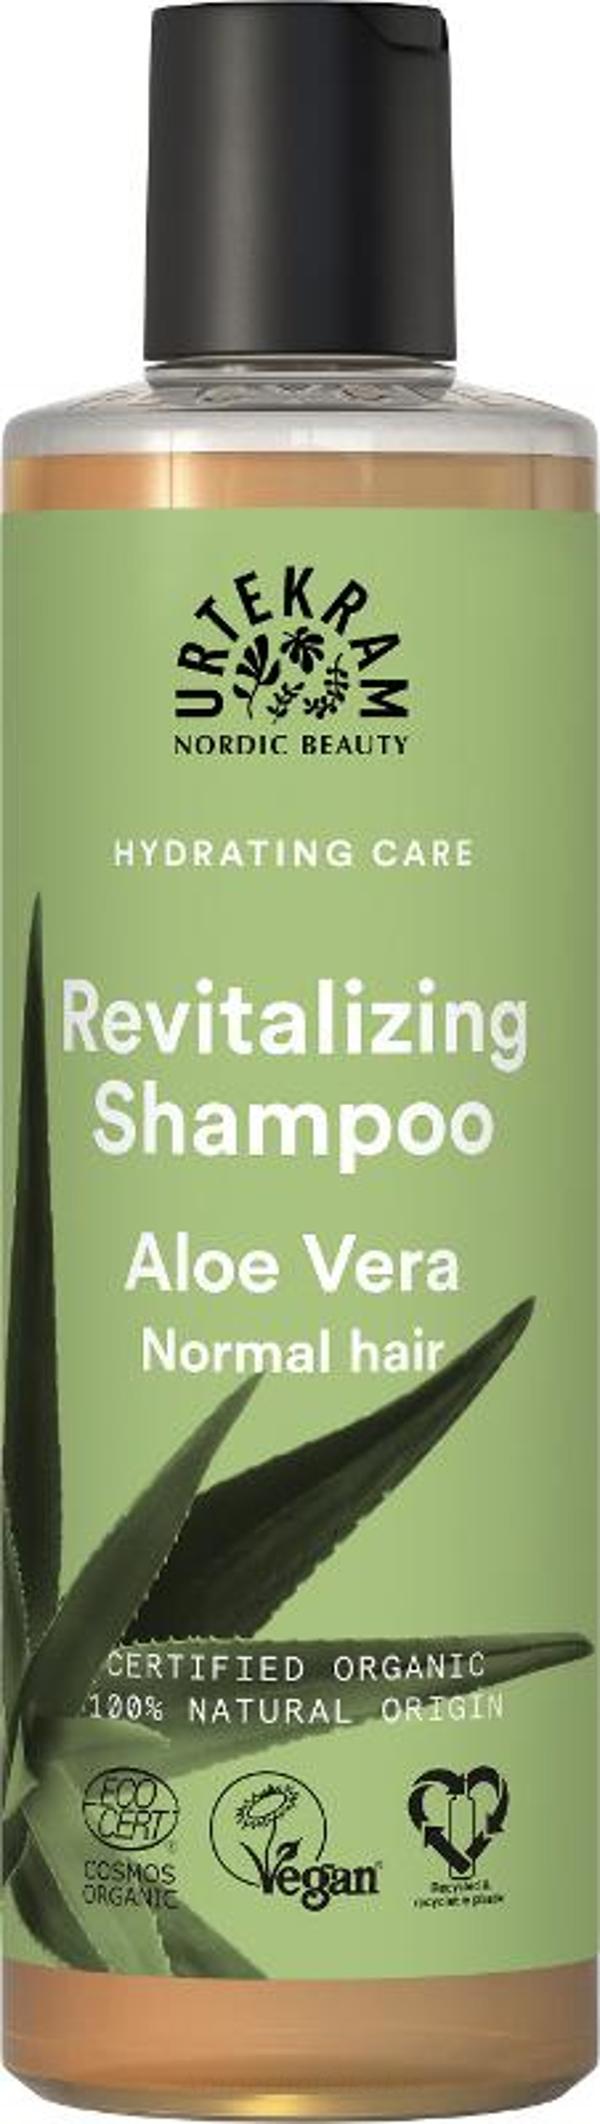 Produktfoto zu Shampoo Aloe Vera 250 ml